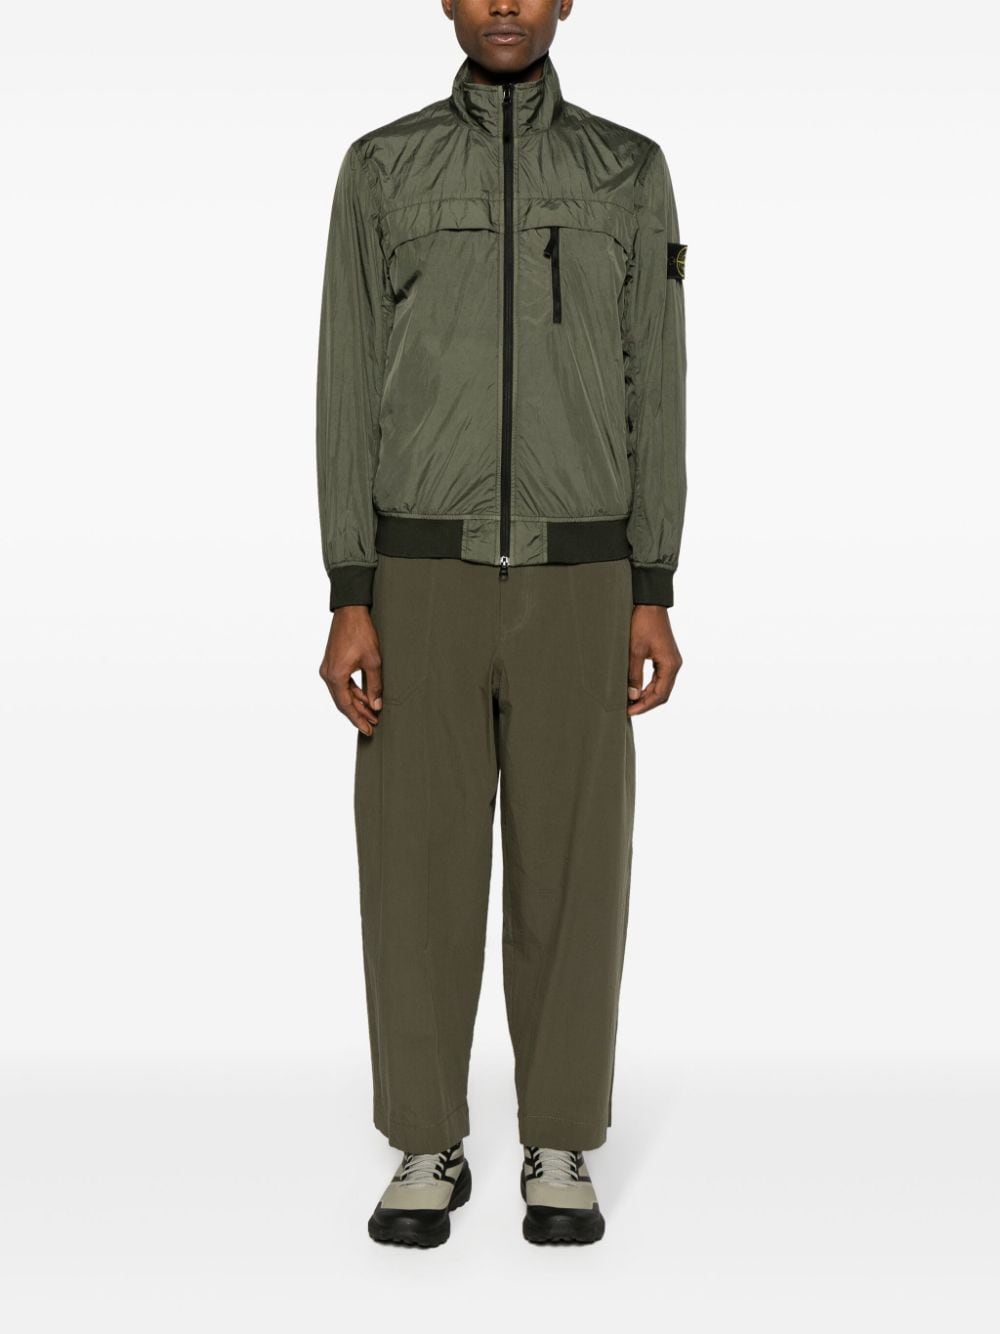 STONE ISLAND Men's Green Nylon Sweatshirt with Detachable Badge and Zipper Details